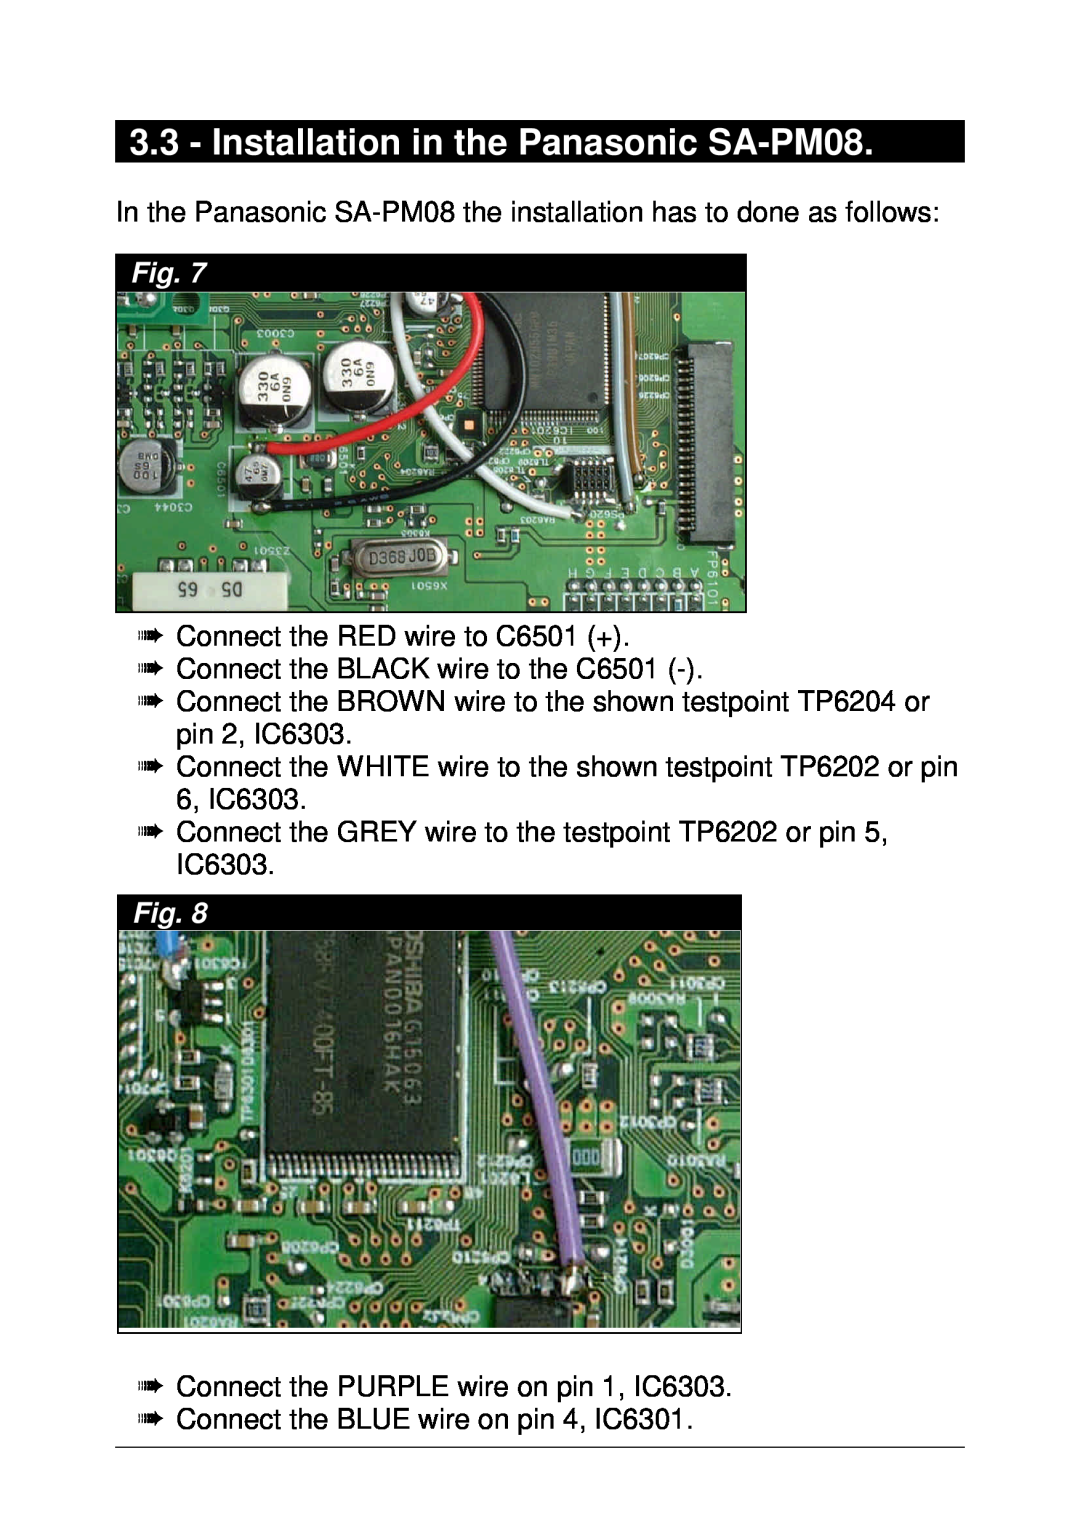 Panasonic 98RV1 installation manual Installation in the Panasonic SA-PM08 